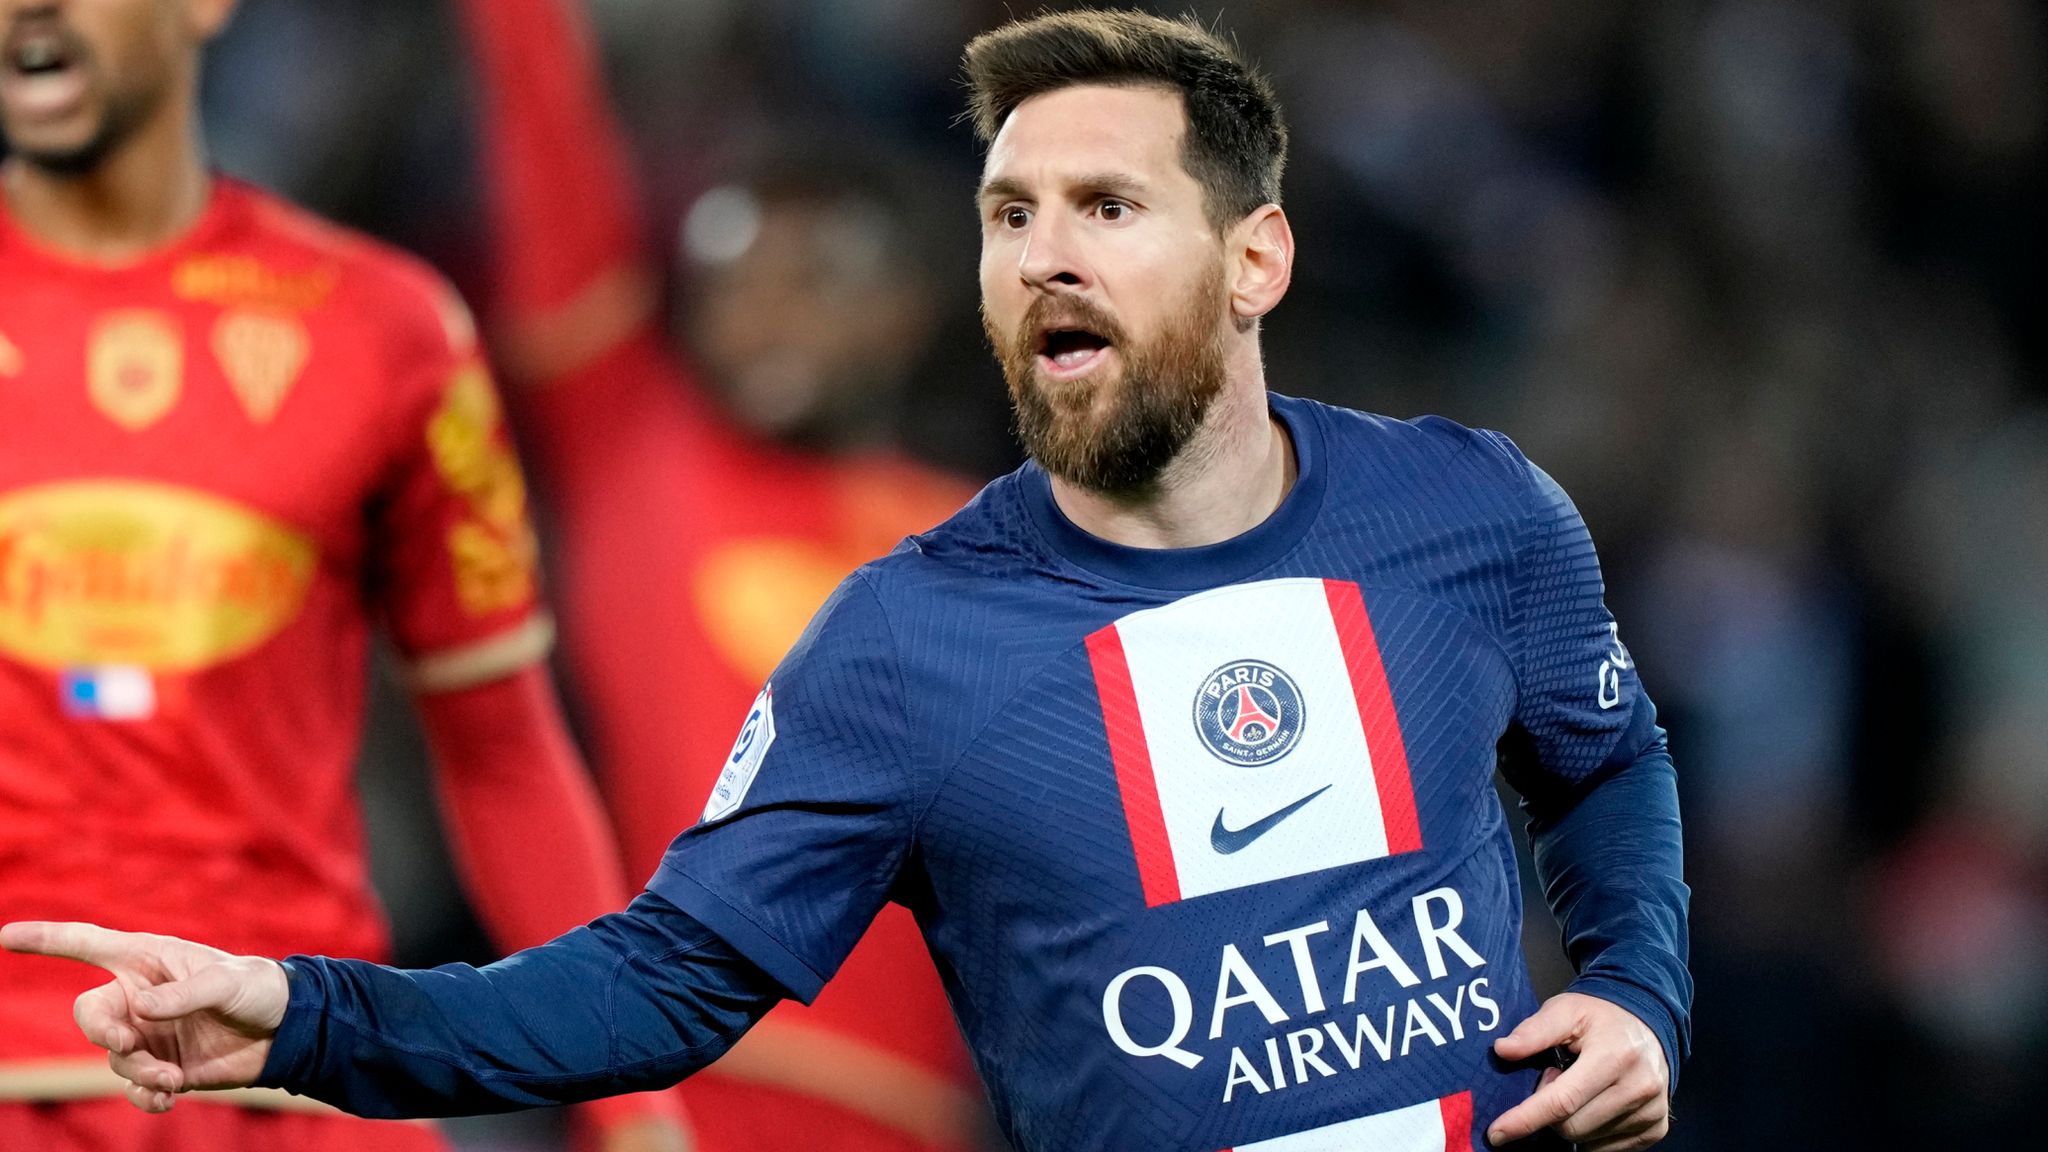 Lionel Messi Player Jersey Paris Saint-GermainTeam, Football